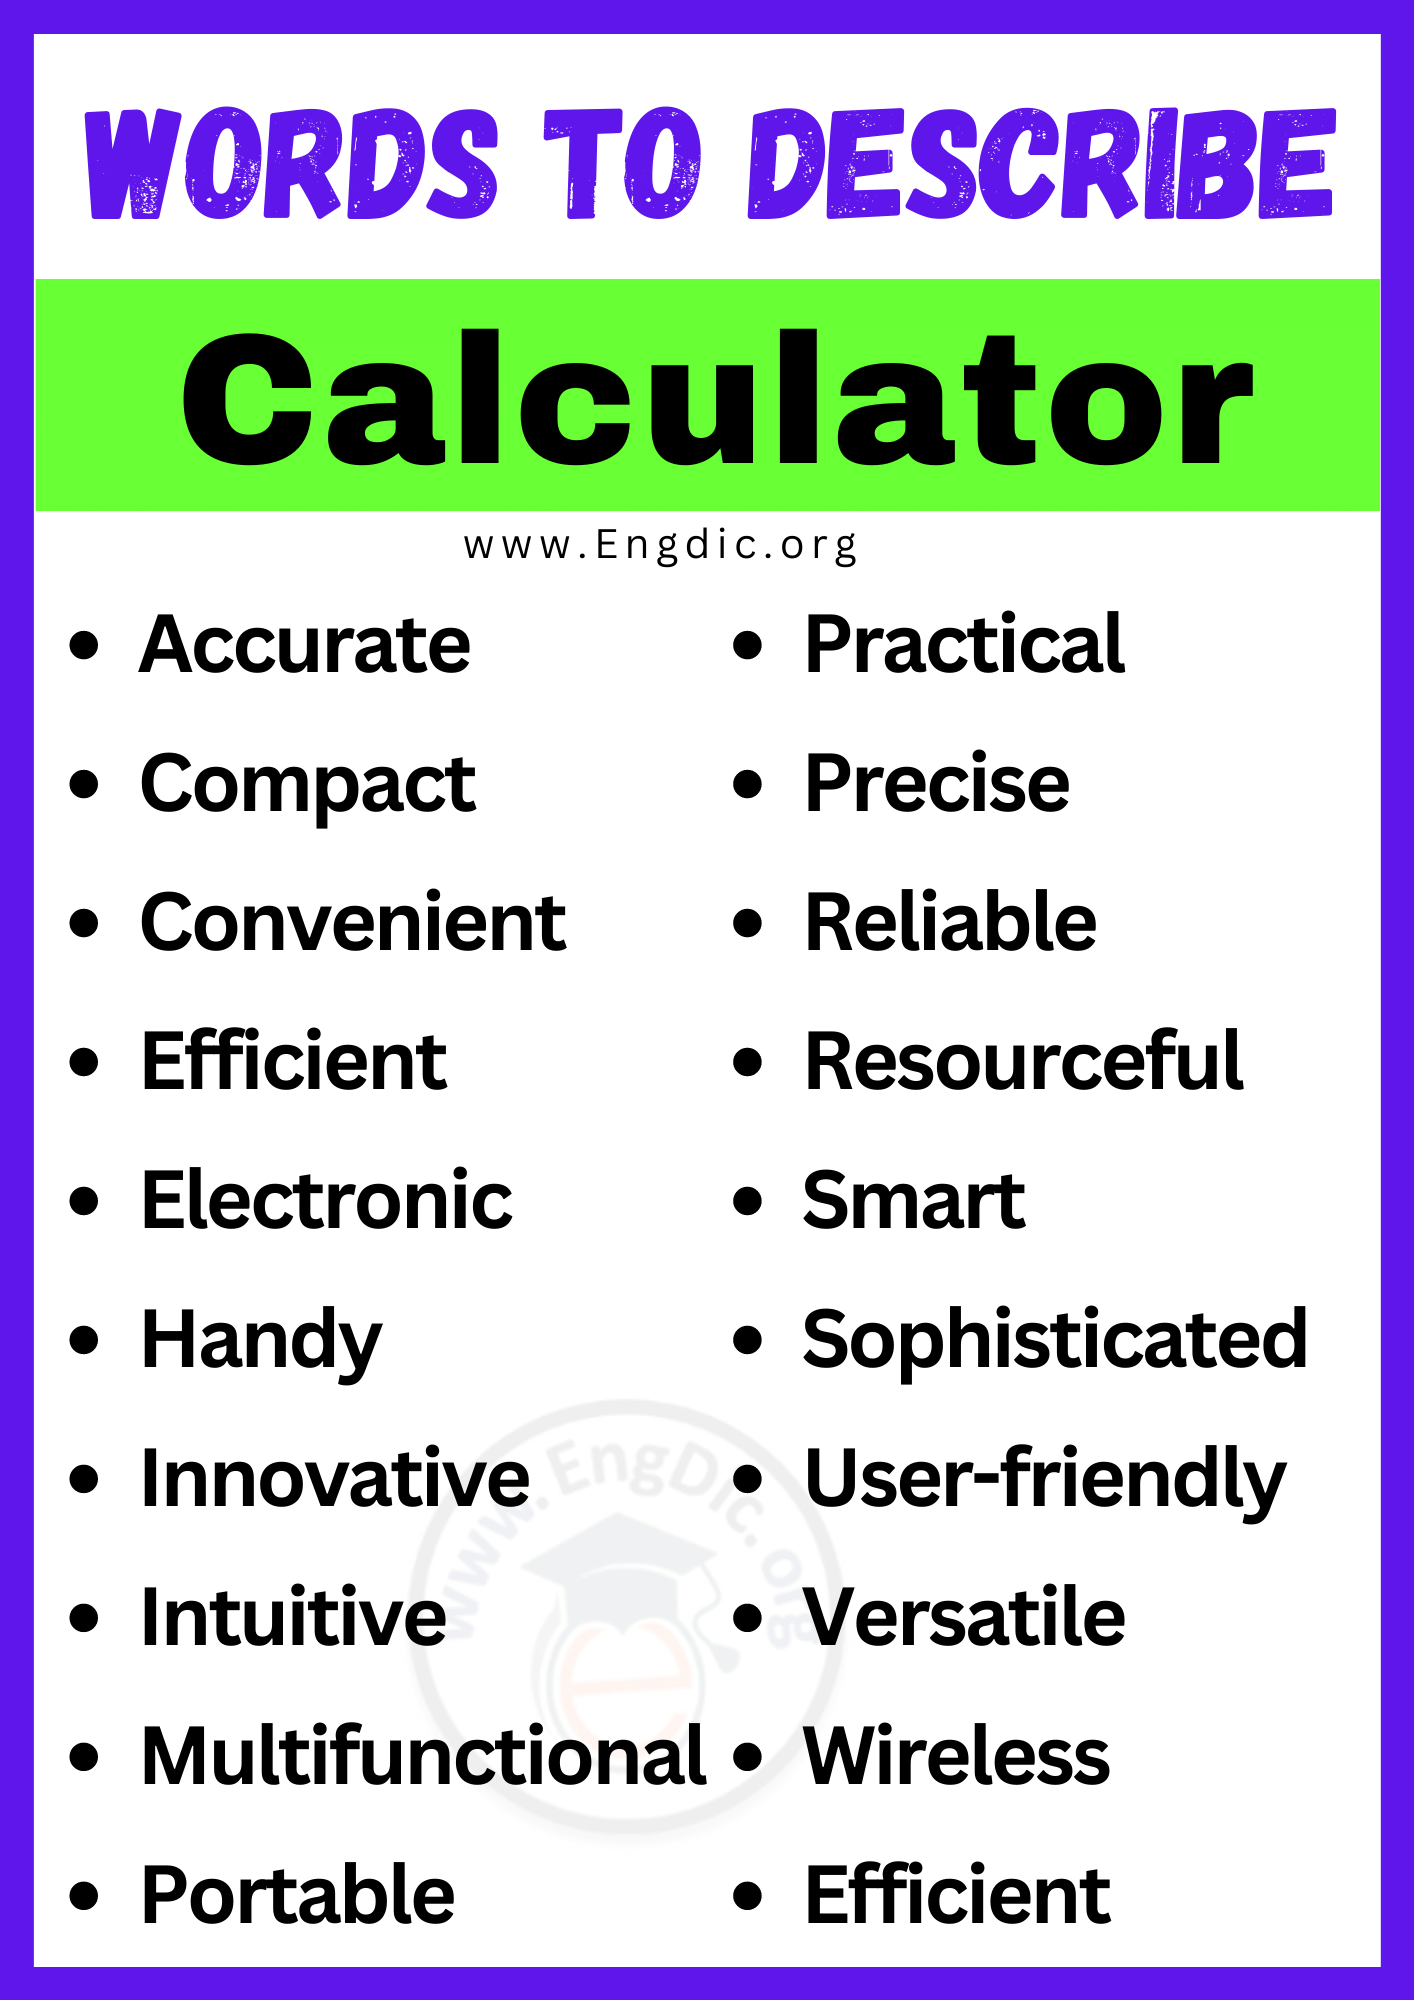 Words to Describe Calculator